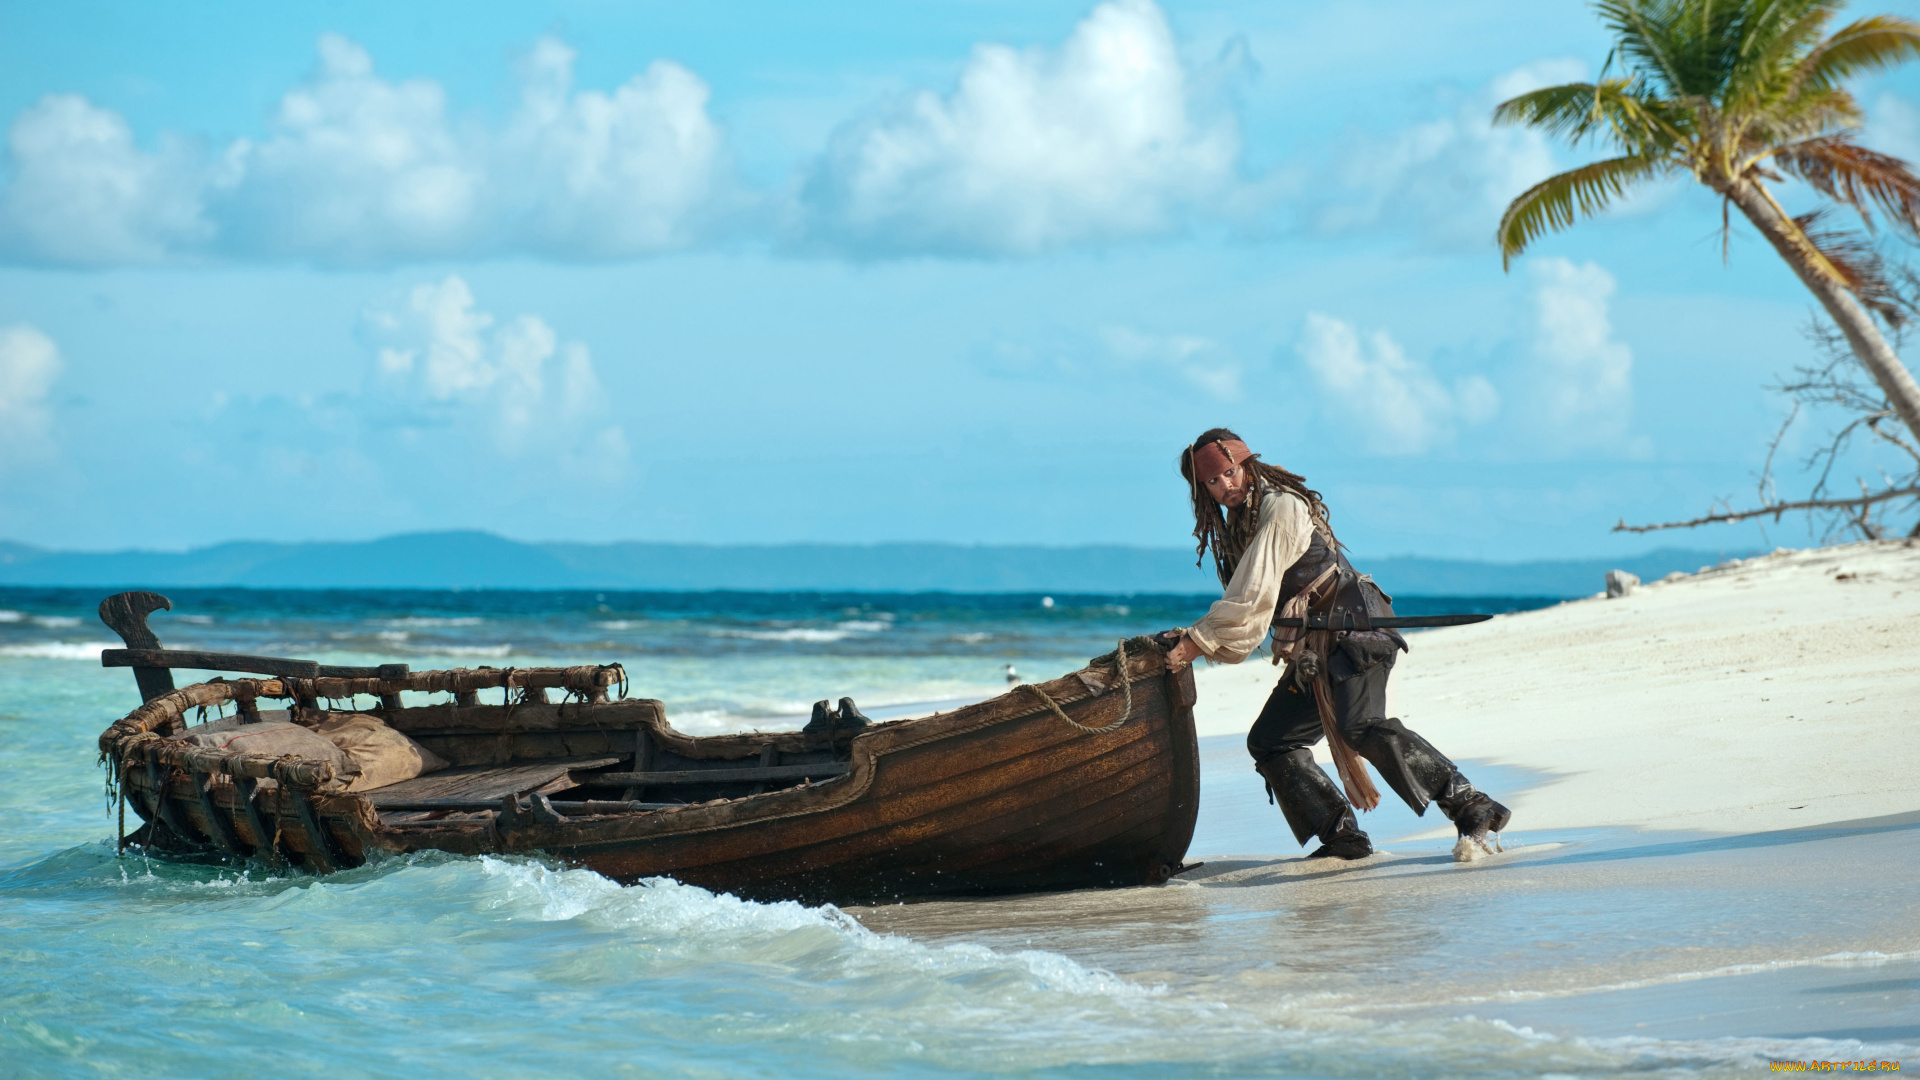 pirates, of, the, caribbean, on, stranger, tides, кино, фильмы